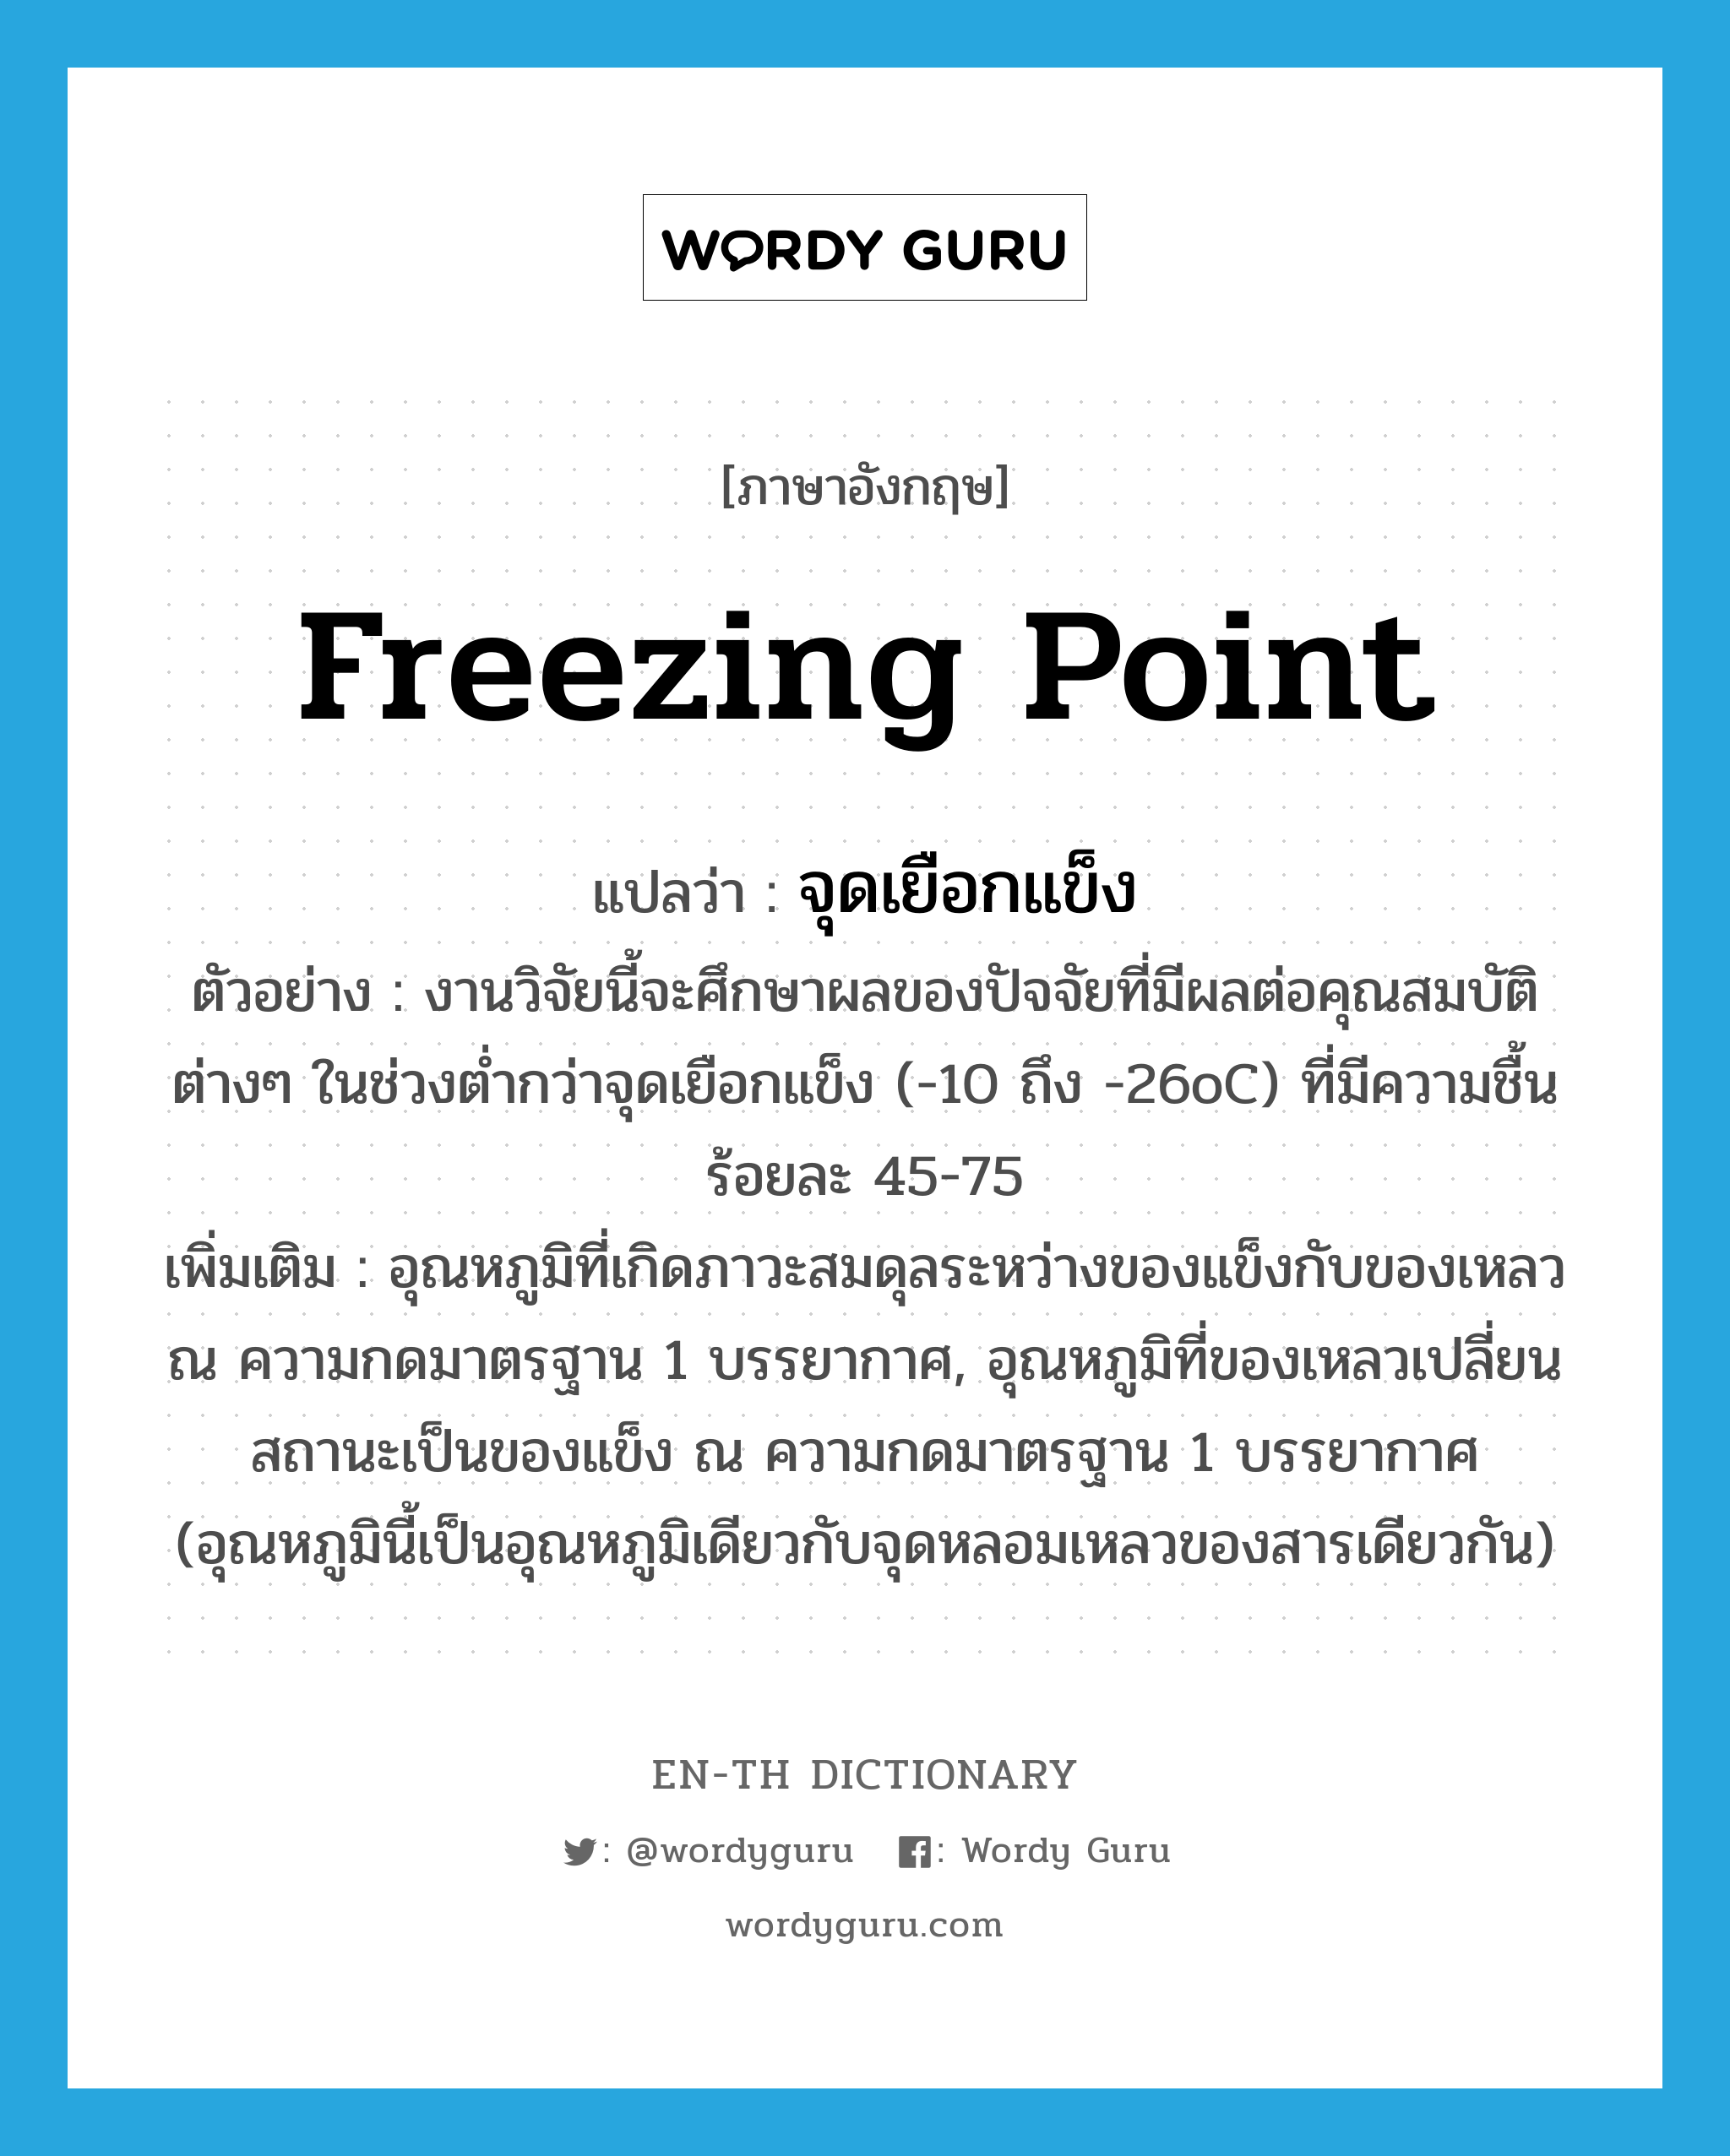 freezing point แปลว่า?, คำศัพท์ภาษาอังกฤษ freezing point แปลว่า จุดเยือกแข็ง ประเภท N ตัวอย่าง งานวิจัยนี้จะศึกษาผลของปัจจัยที่มีผลต่อคุณสมบัติต่างๆ ในช่วงต่ำกว่าจุดเยือกแข็ง (-10 ถึง -26oC) ที่มีความชื้นร้อยละ 45-75 เพิ่มเติม อุณหภูมิที่เกิดภาวะสมดุลระหว่างของแข็งกับของเหลว ณ ความกดมาตรฐาน 1 บรรยากาศ, อุณหภูมิที่ของเหลวเปลี่ยนสถานะเป็นของแข็ง ณ ความกดมาตรฐาน 1 บรรยากาศ (อุณหภูมินี้เป็นอุณหภูมิเดียวกับจุดหลอมเหลวของสารเดียวกัน) หมวด N